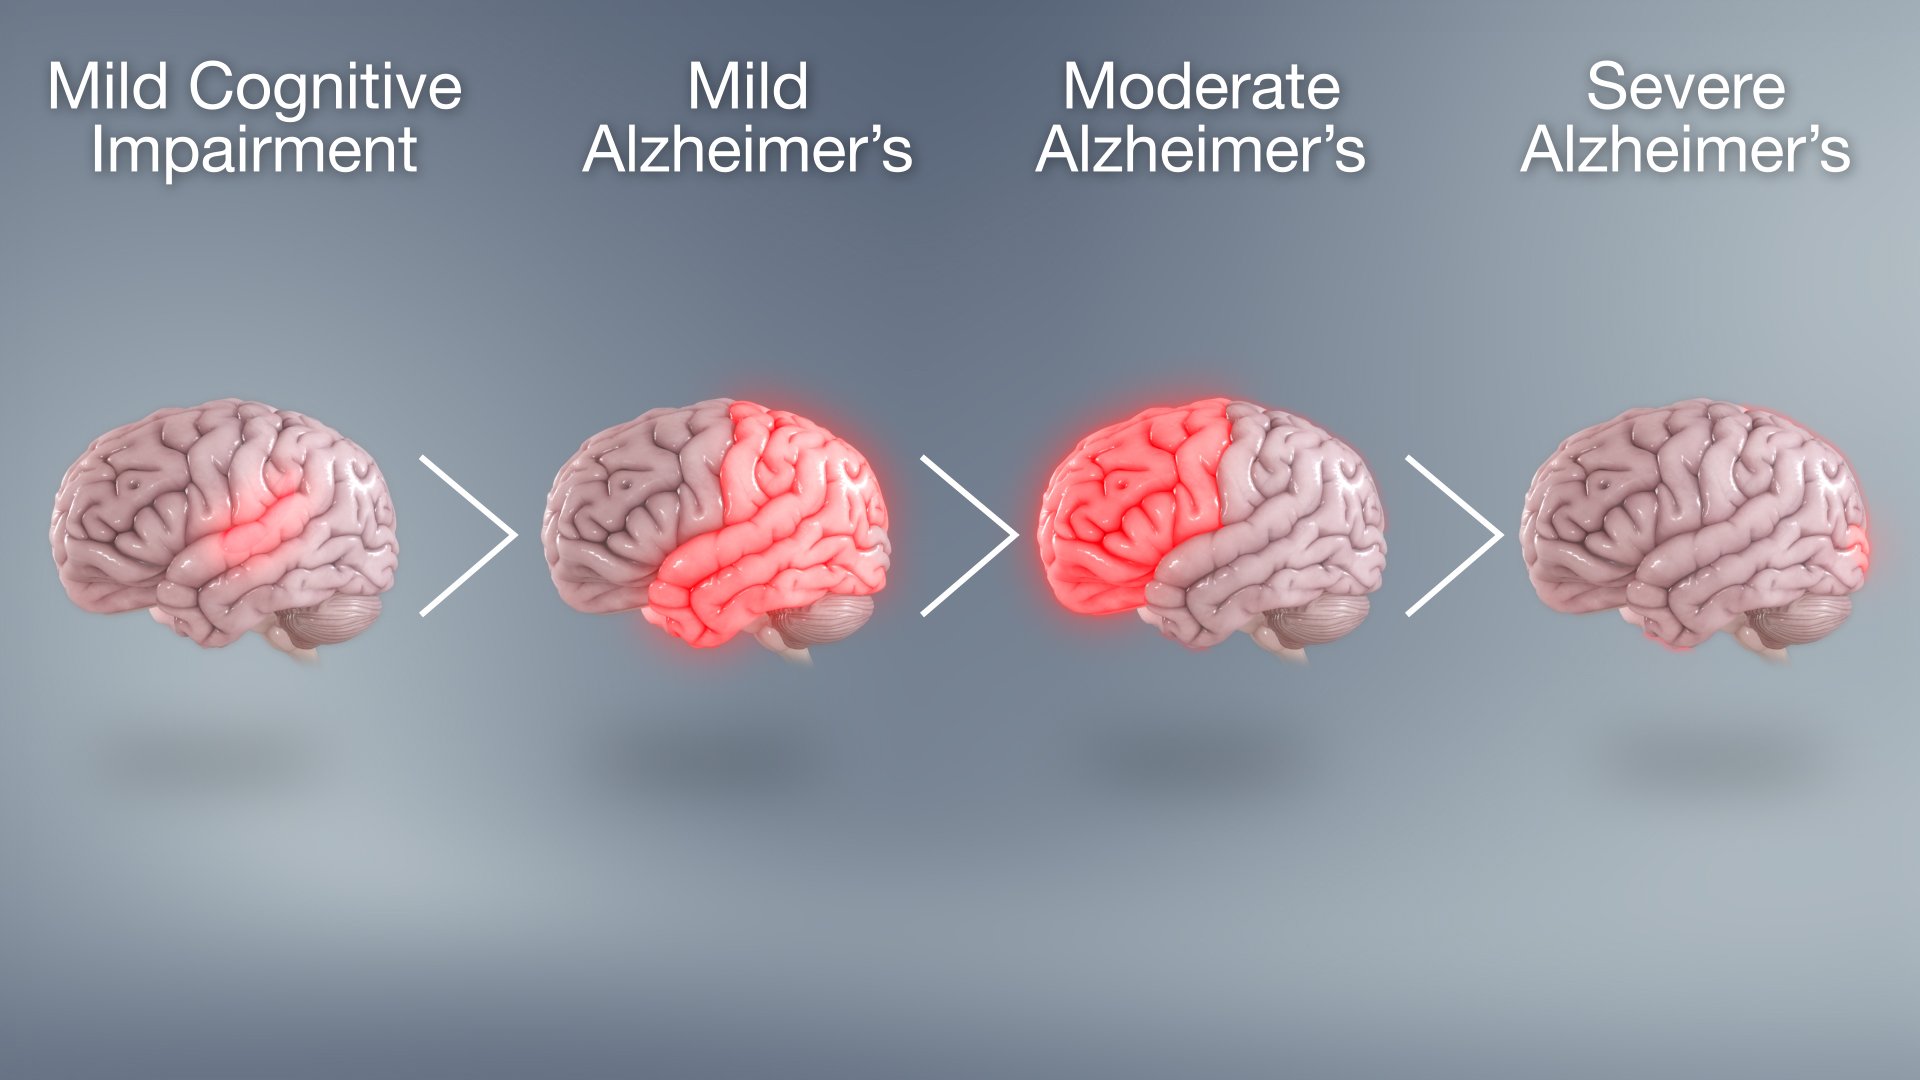 Progression of Alzheimerâs Disease